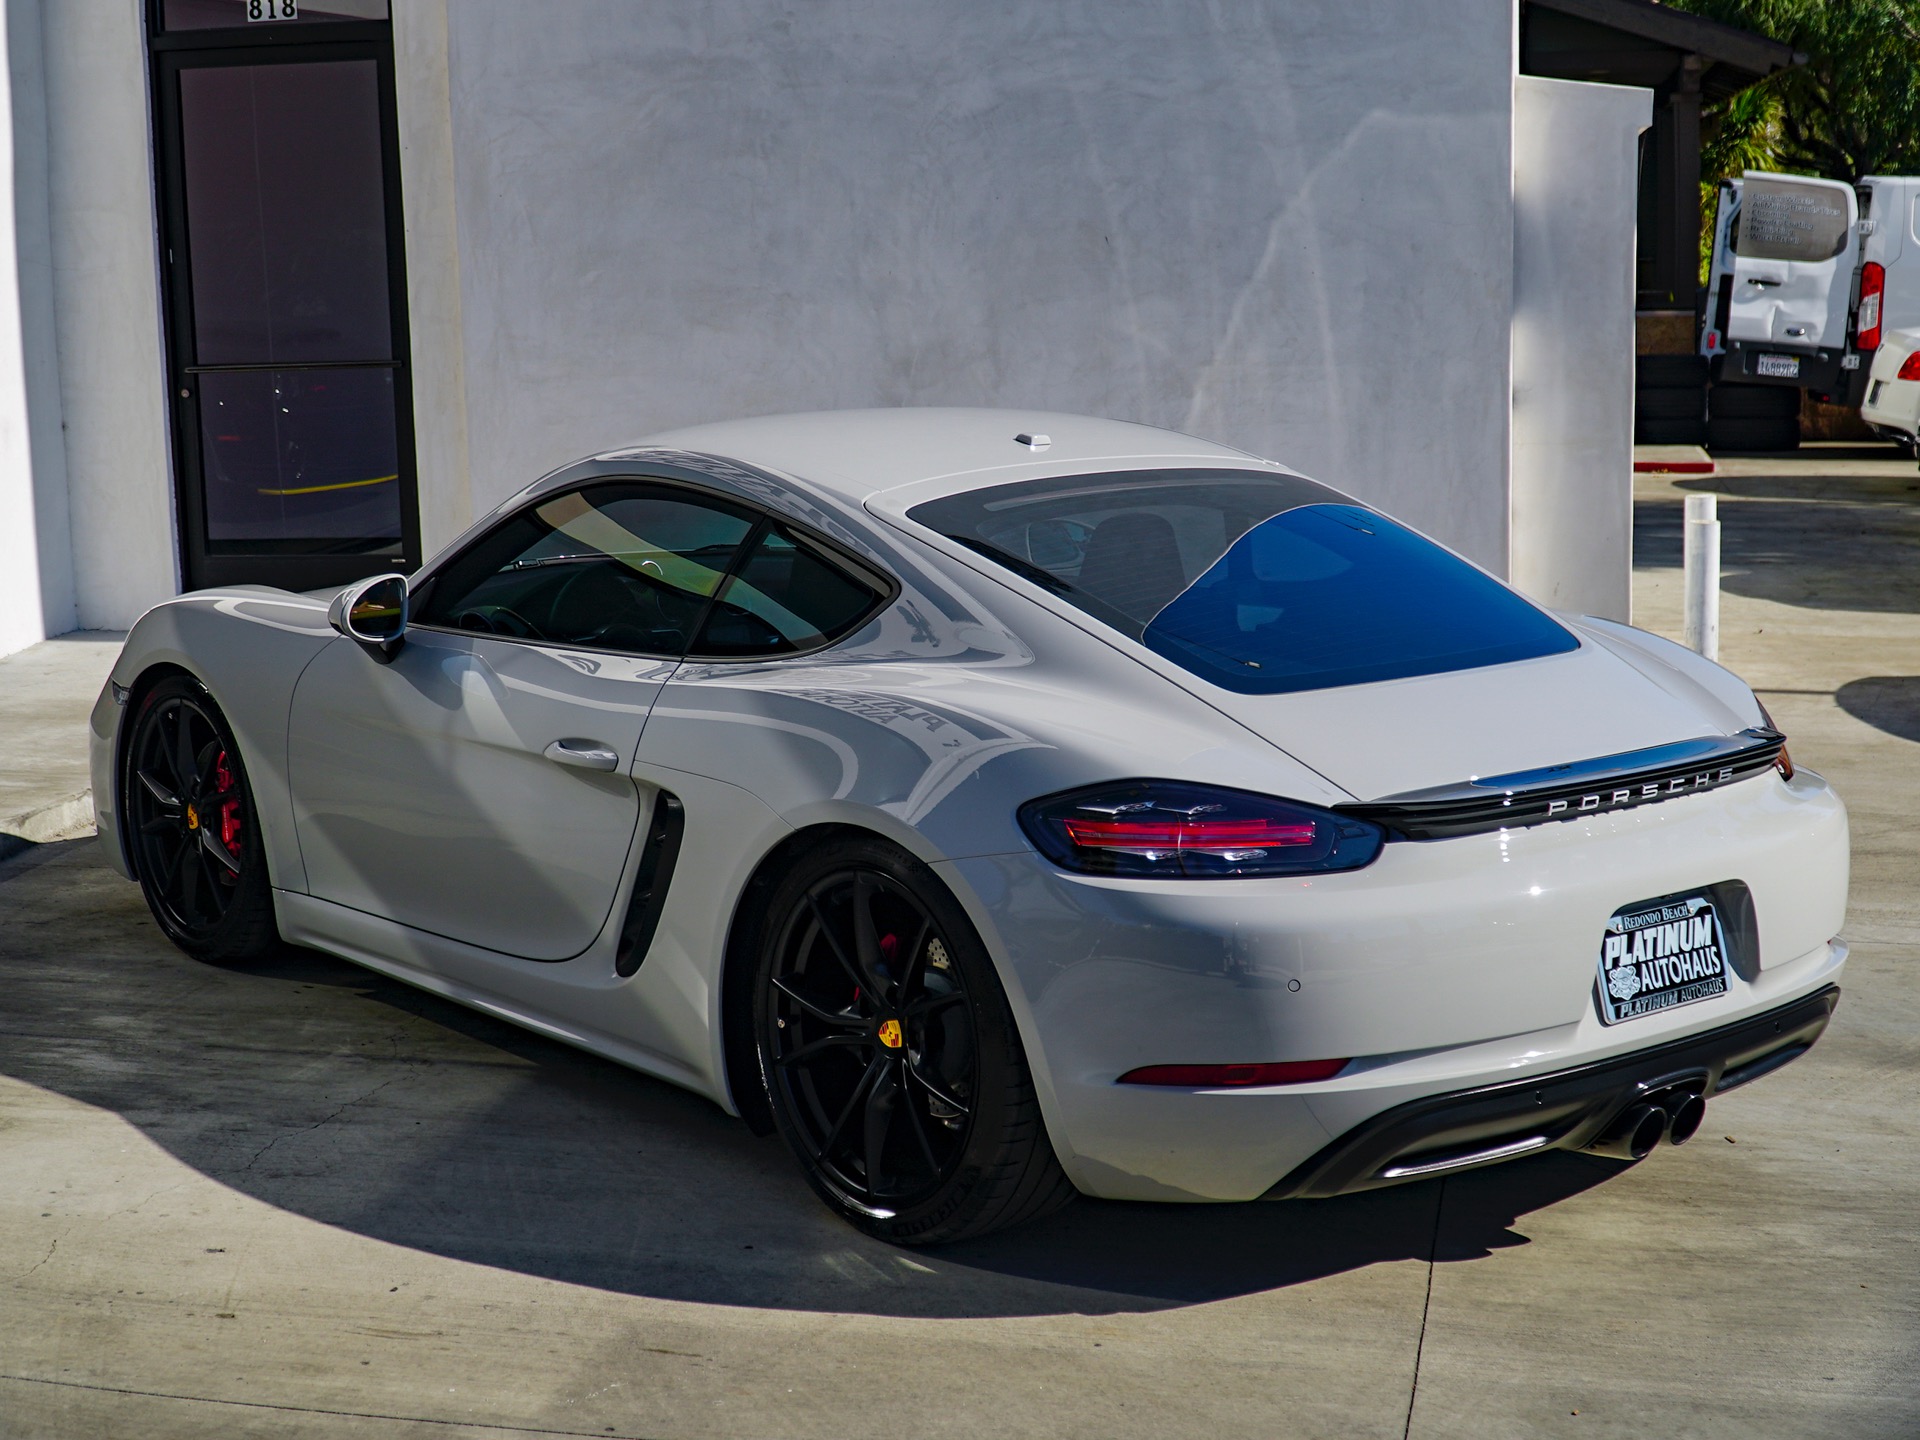 2019 Porsche 718 Cayman S Stock # 6795A for sale near Redondo Beach, CA |  CA Porsche Dealer